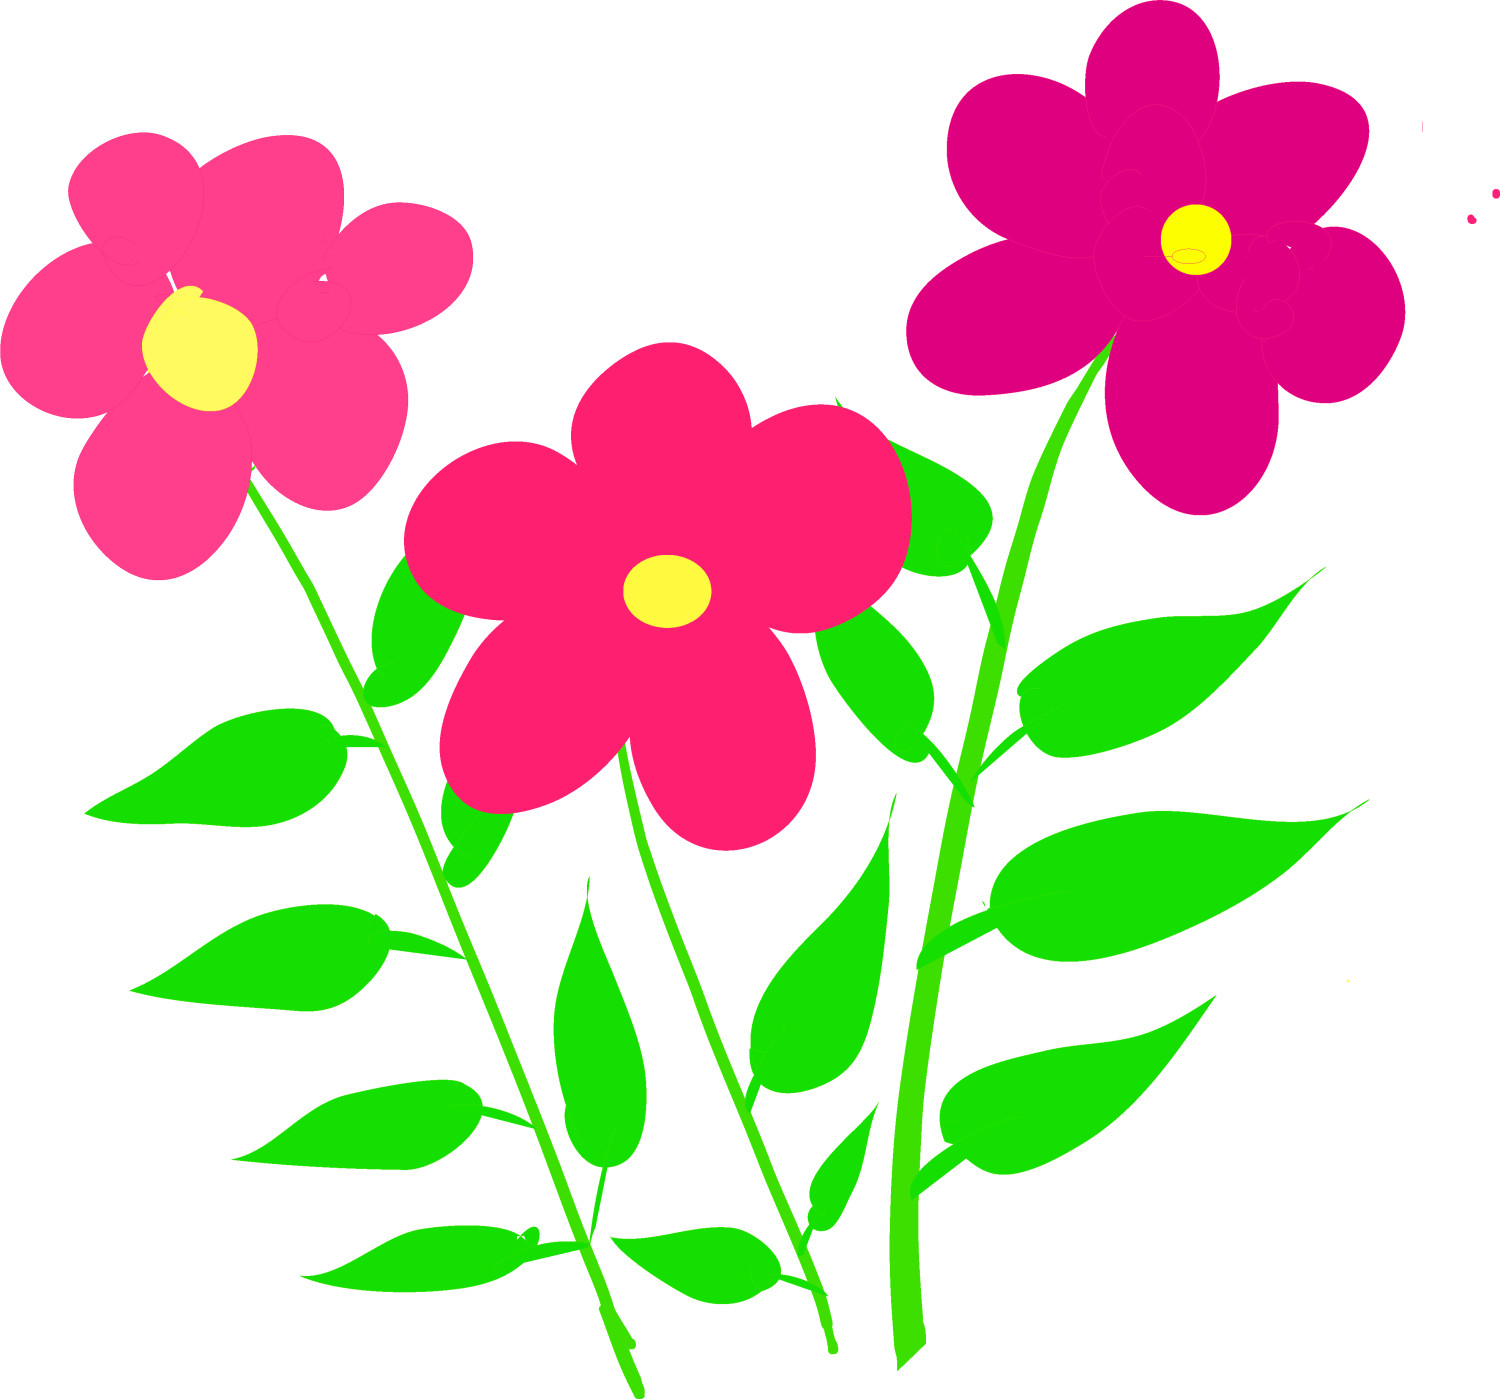 Three flower's digital artwork